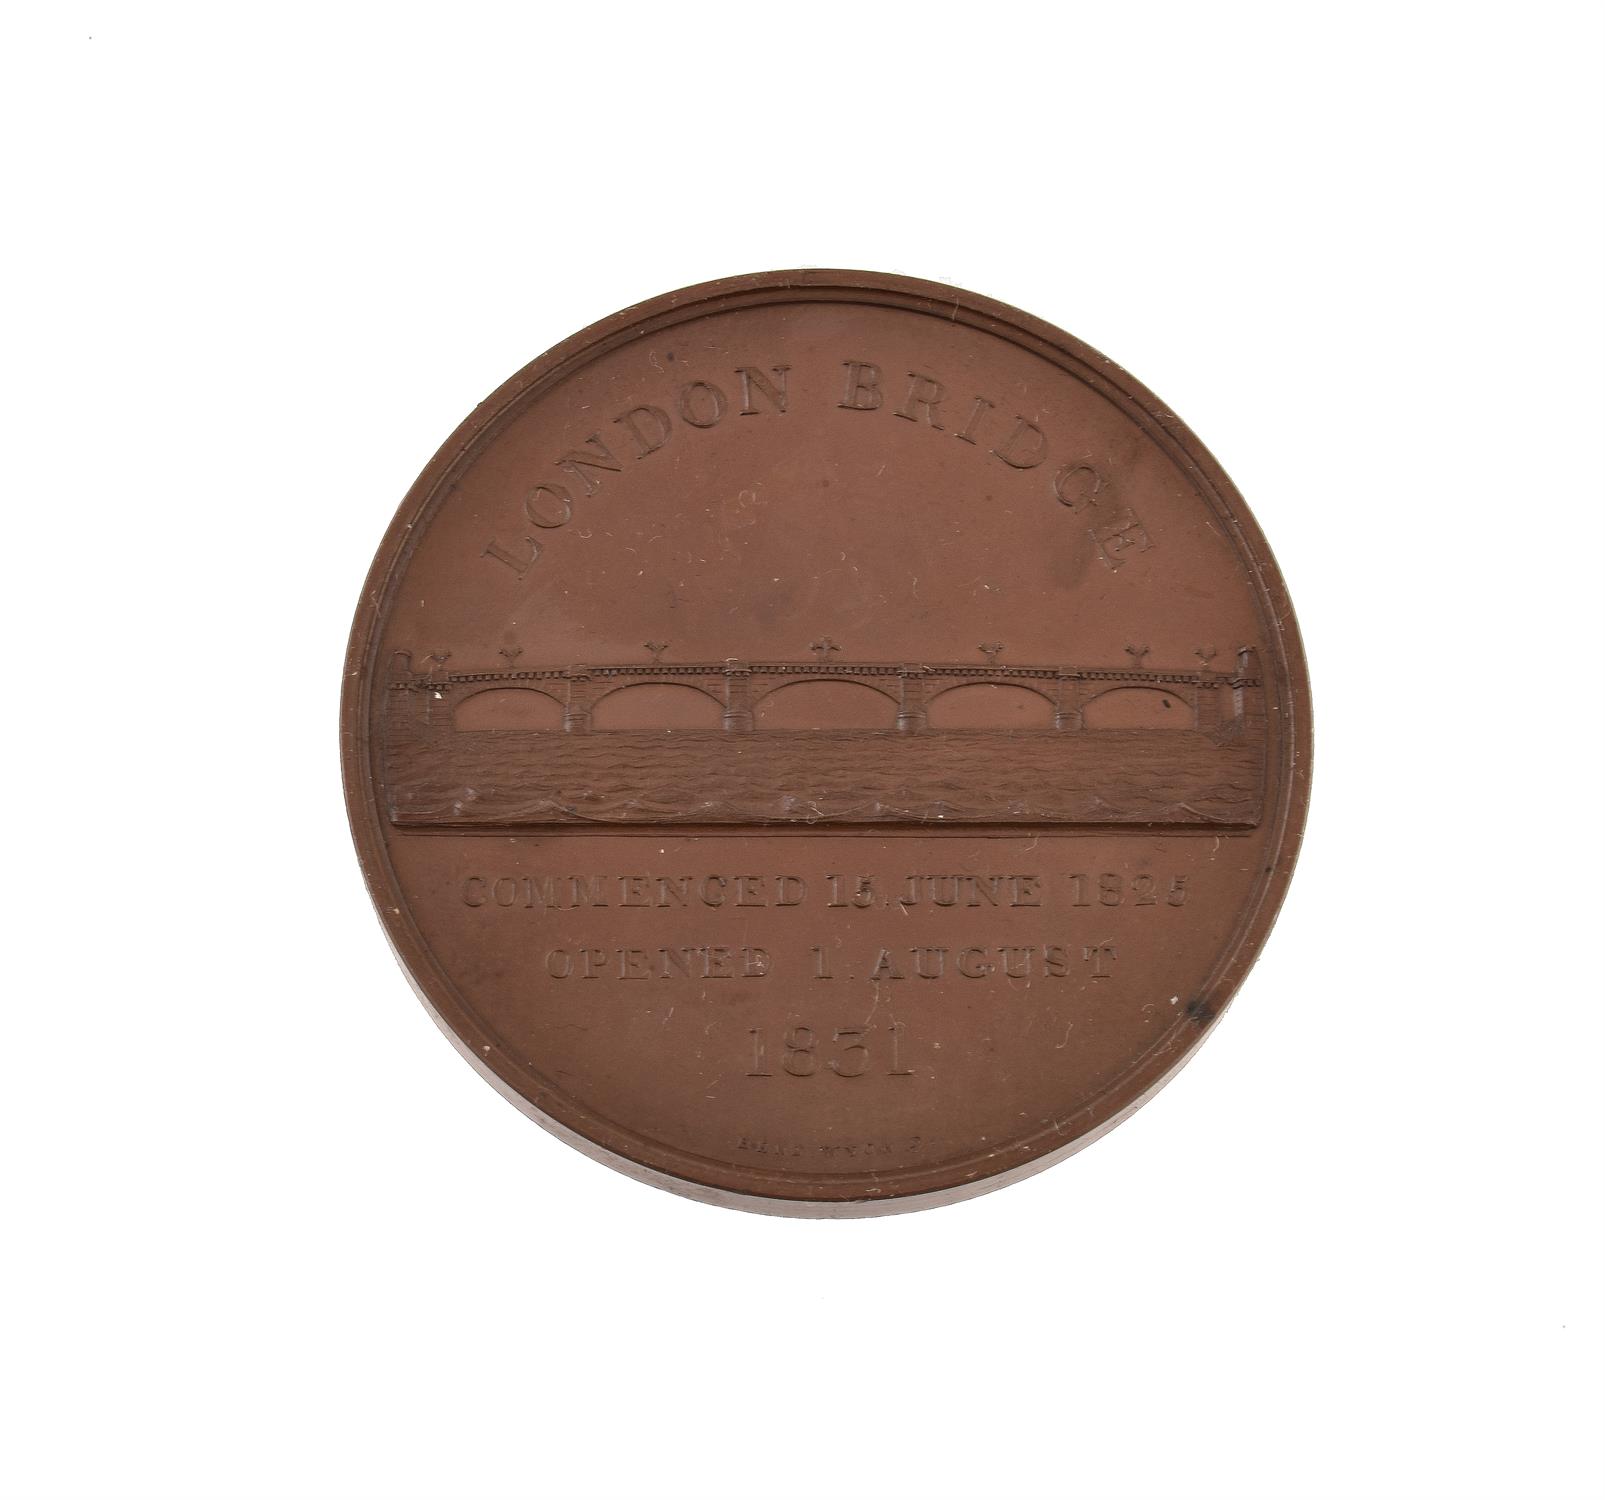 London Bridge opened 1831, bronze medal by B Wyon - Image 2 of 2